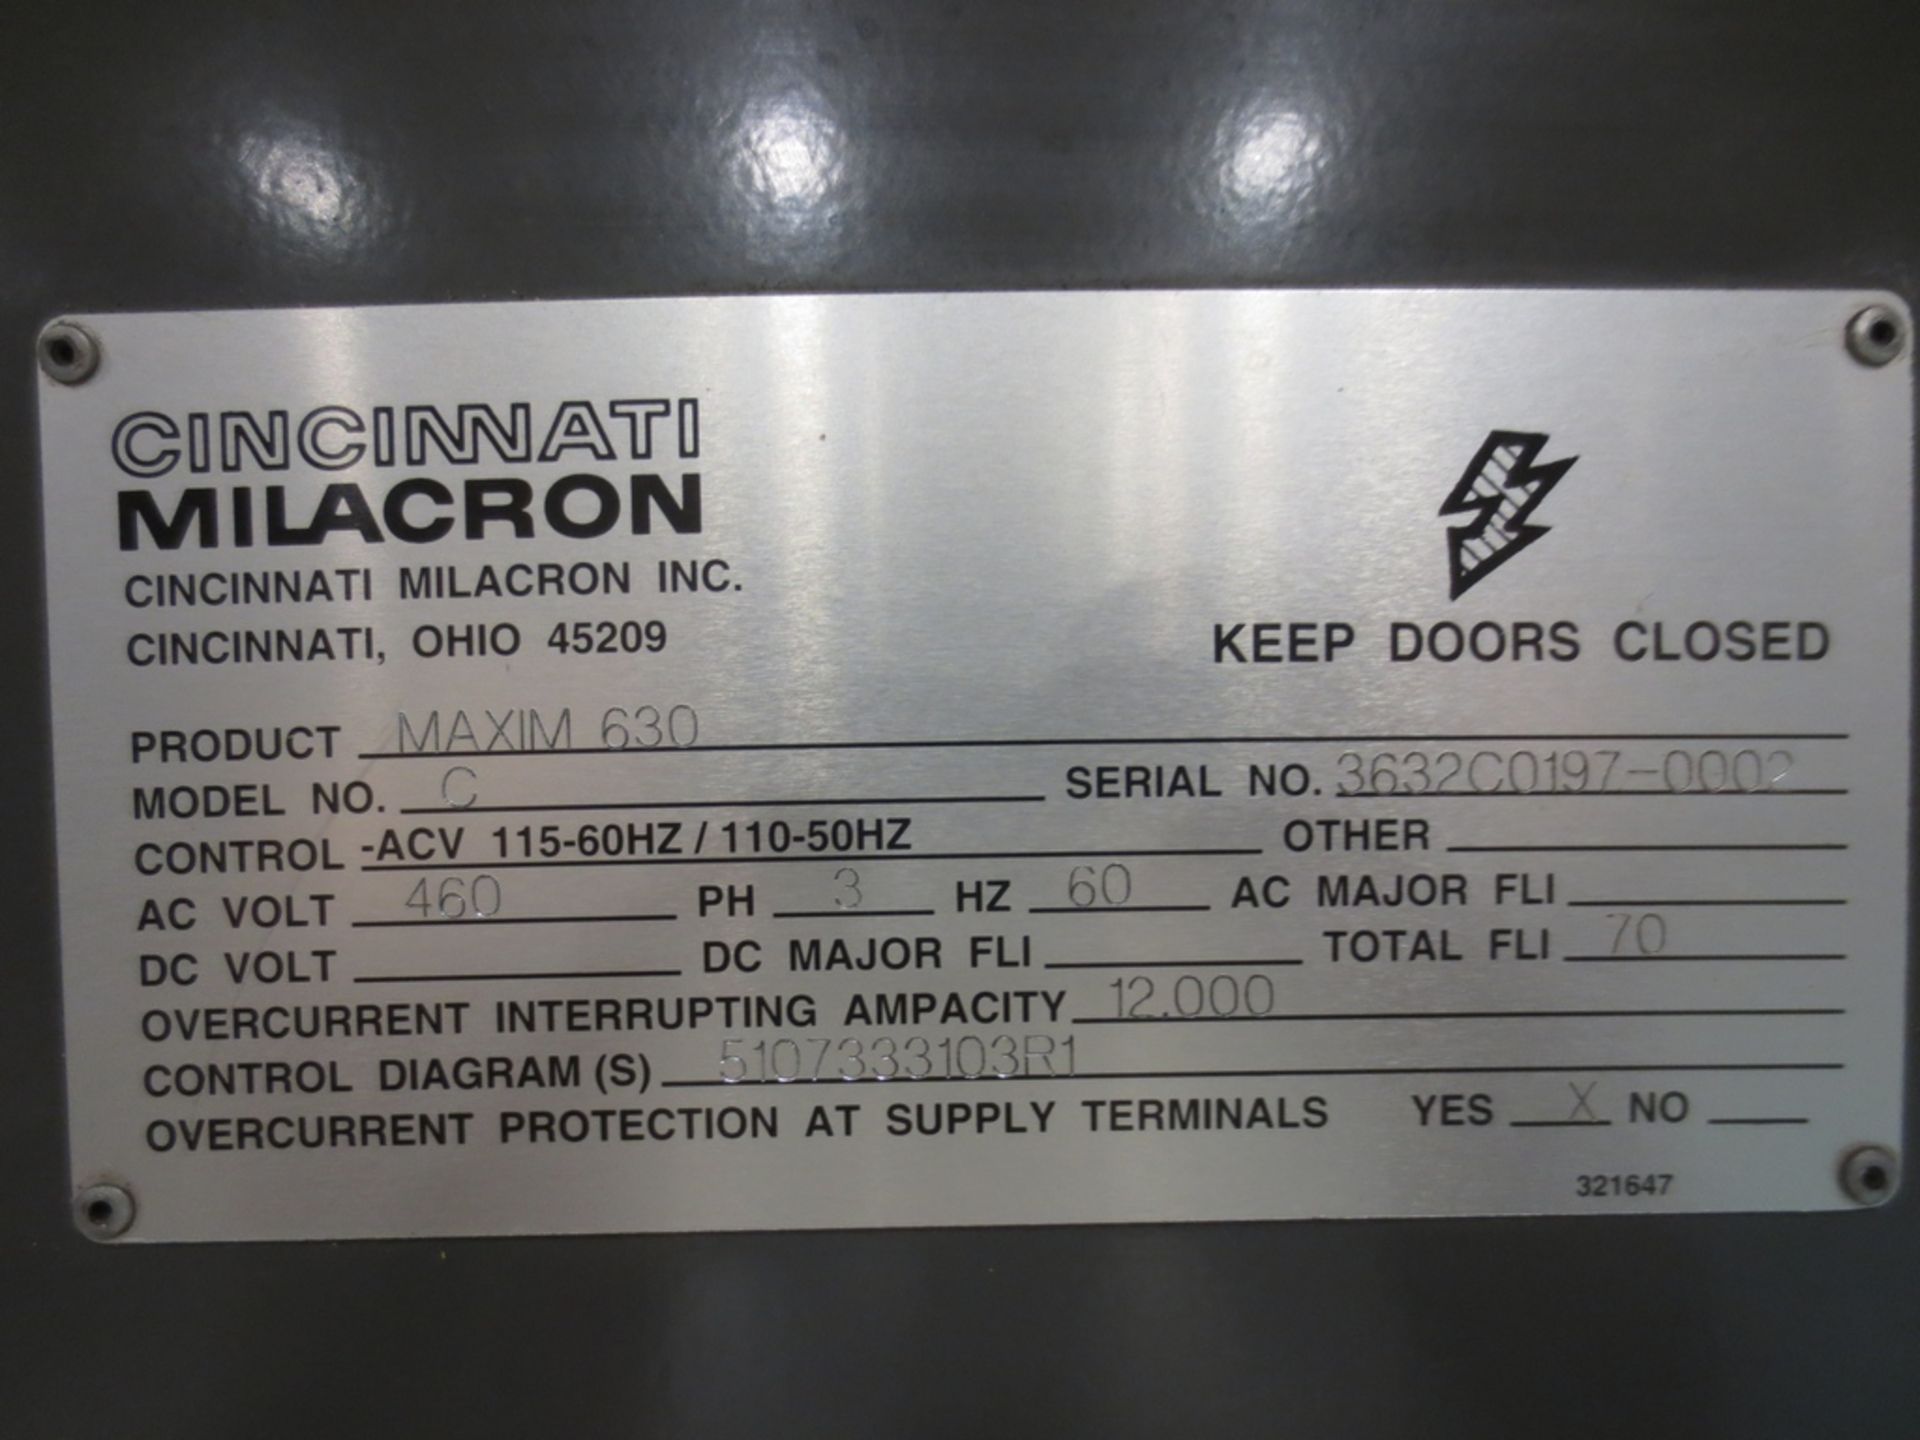 CINCINNATI MILACRON 4-AXIS MODEL MAXIM 630 CNC HORIZONTAL MACHINING CENTER, S/N 3632C0197-0002, 24. - Image 11 of 11